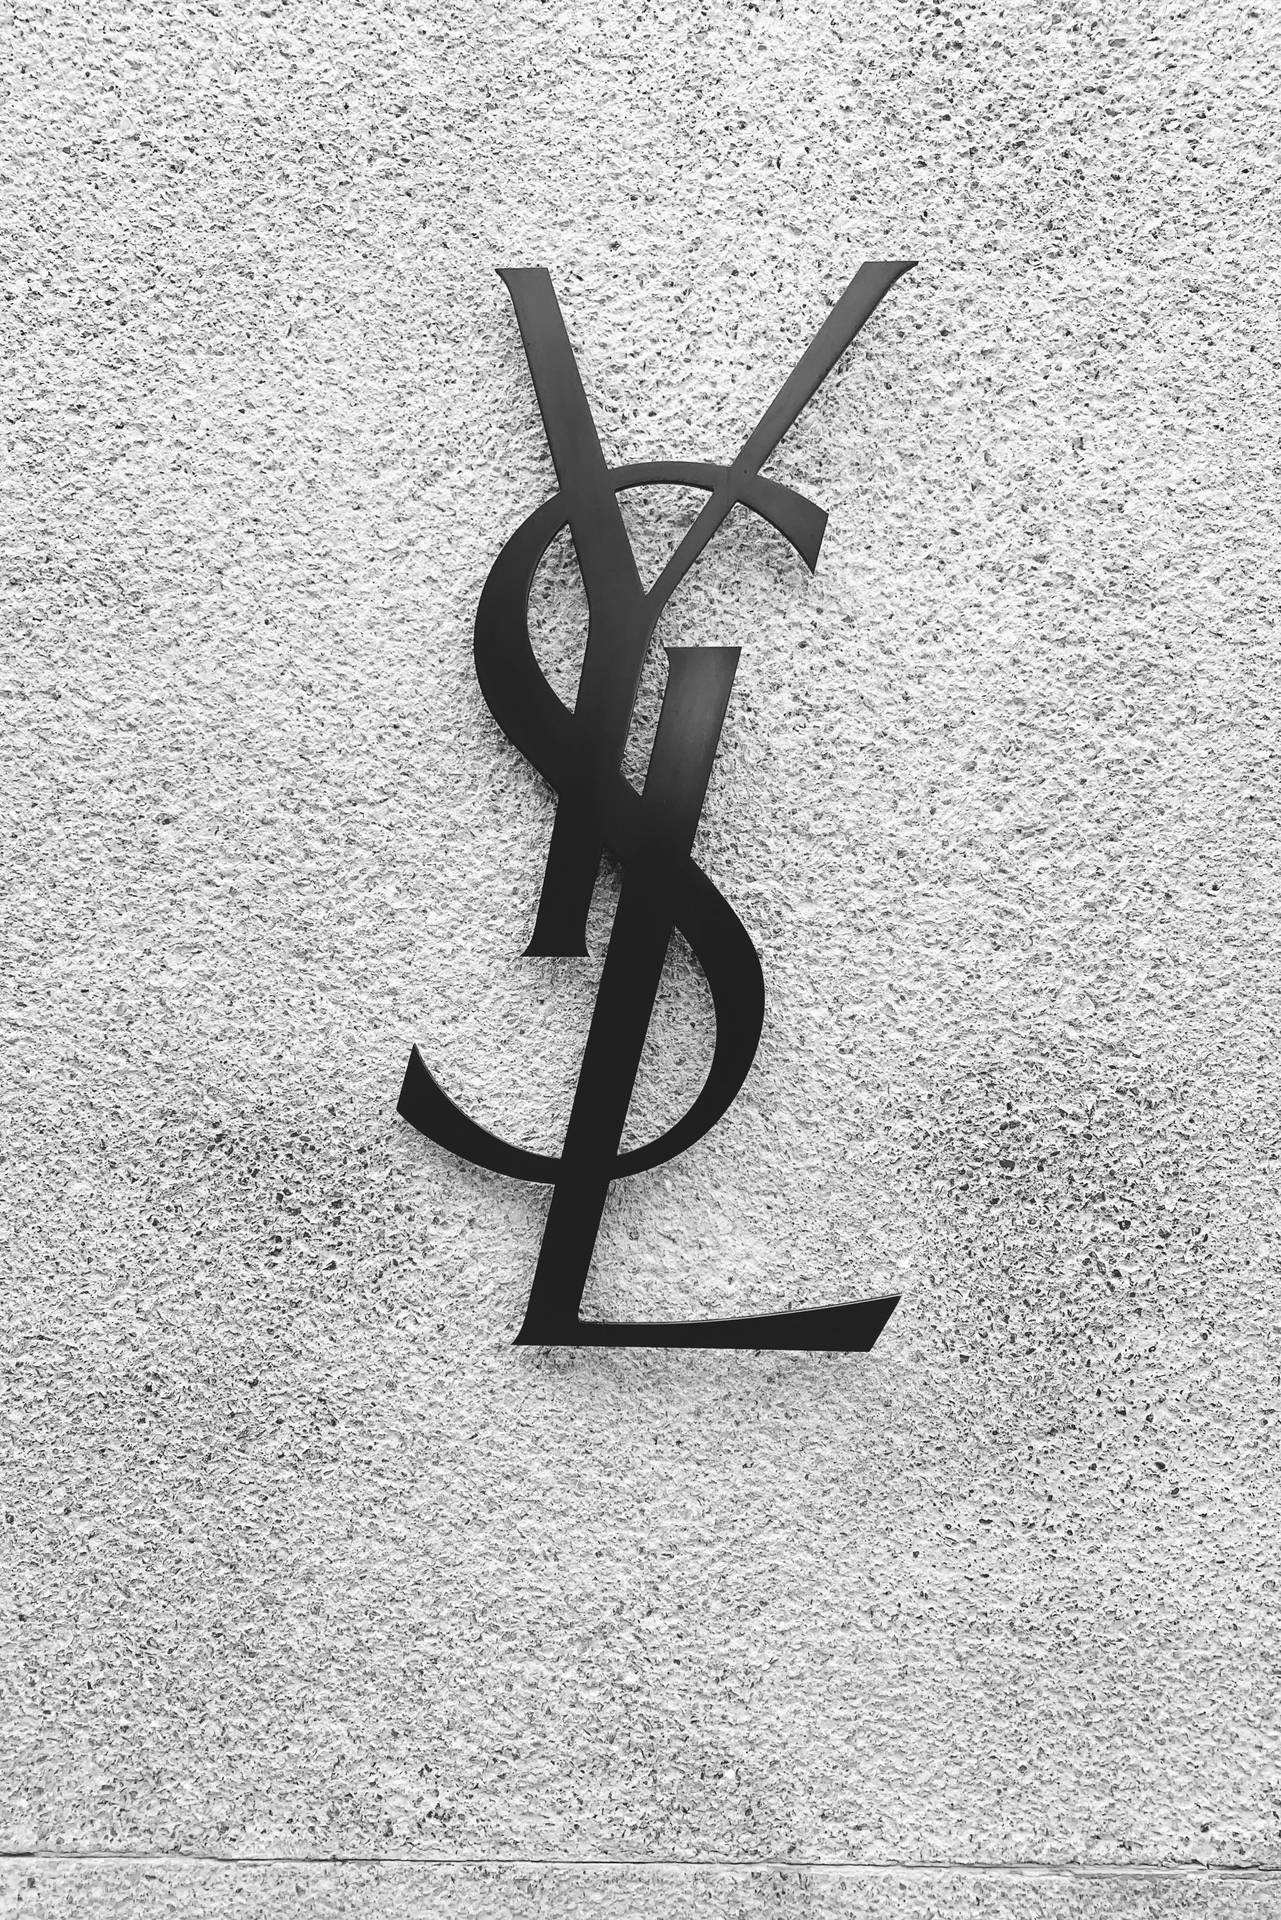 Caption: Ysl Logo Against A Black Concrete Wall Background